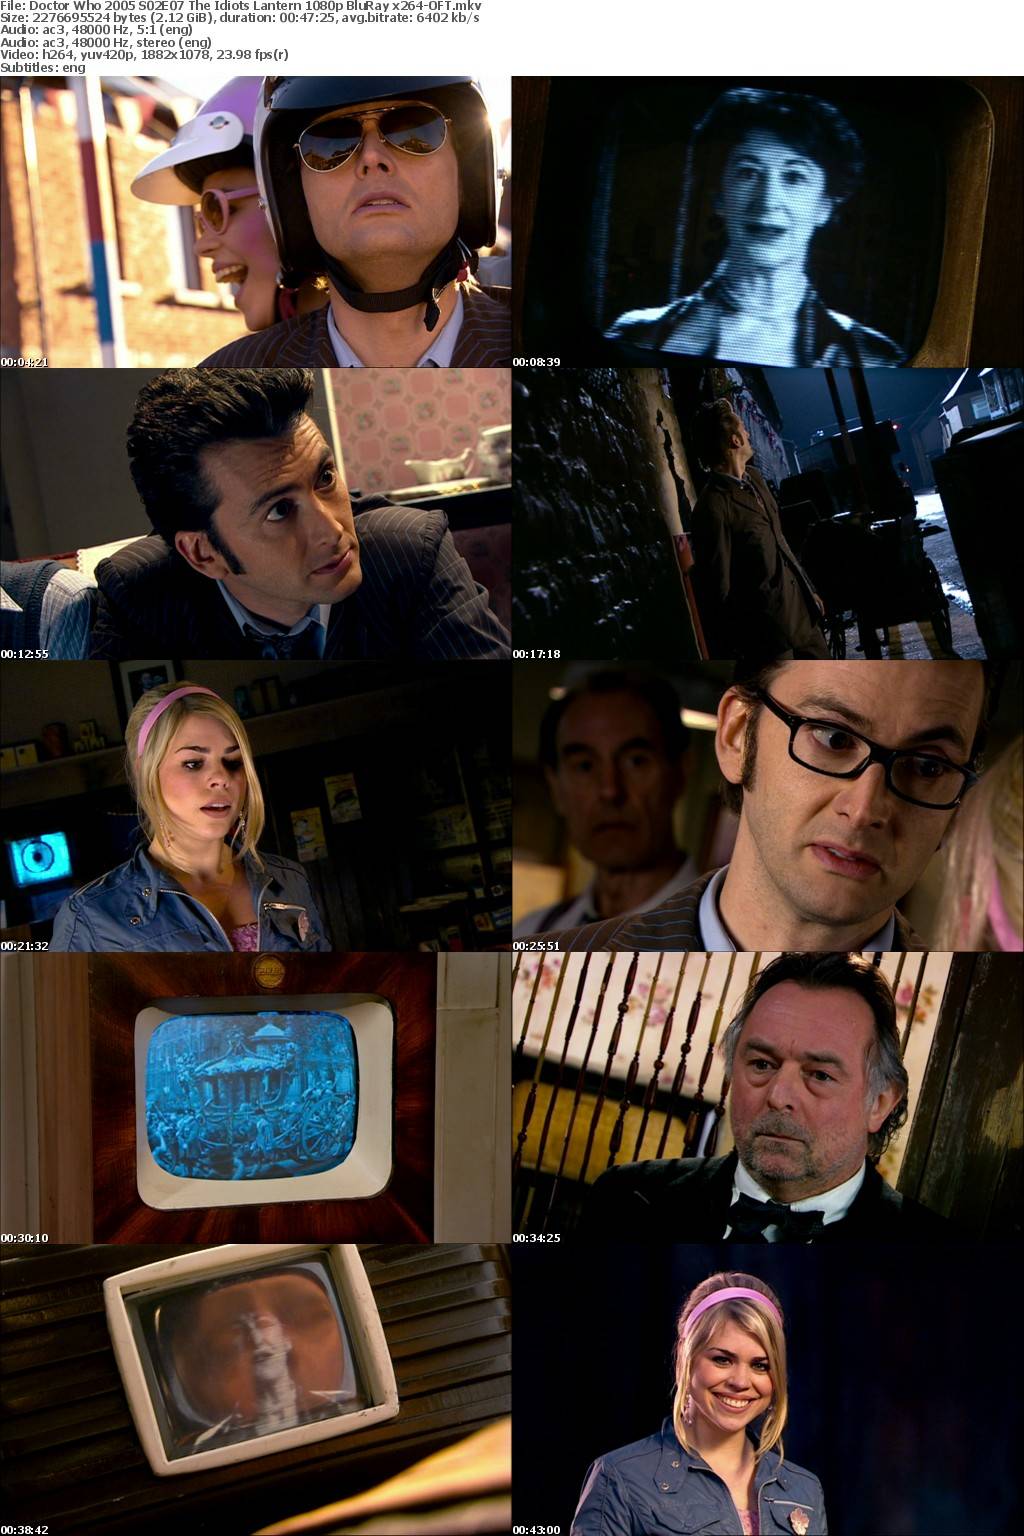 Doctor Who 2005 S02E07 The Idiots Lantern 1080p BluRay x264-OFT